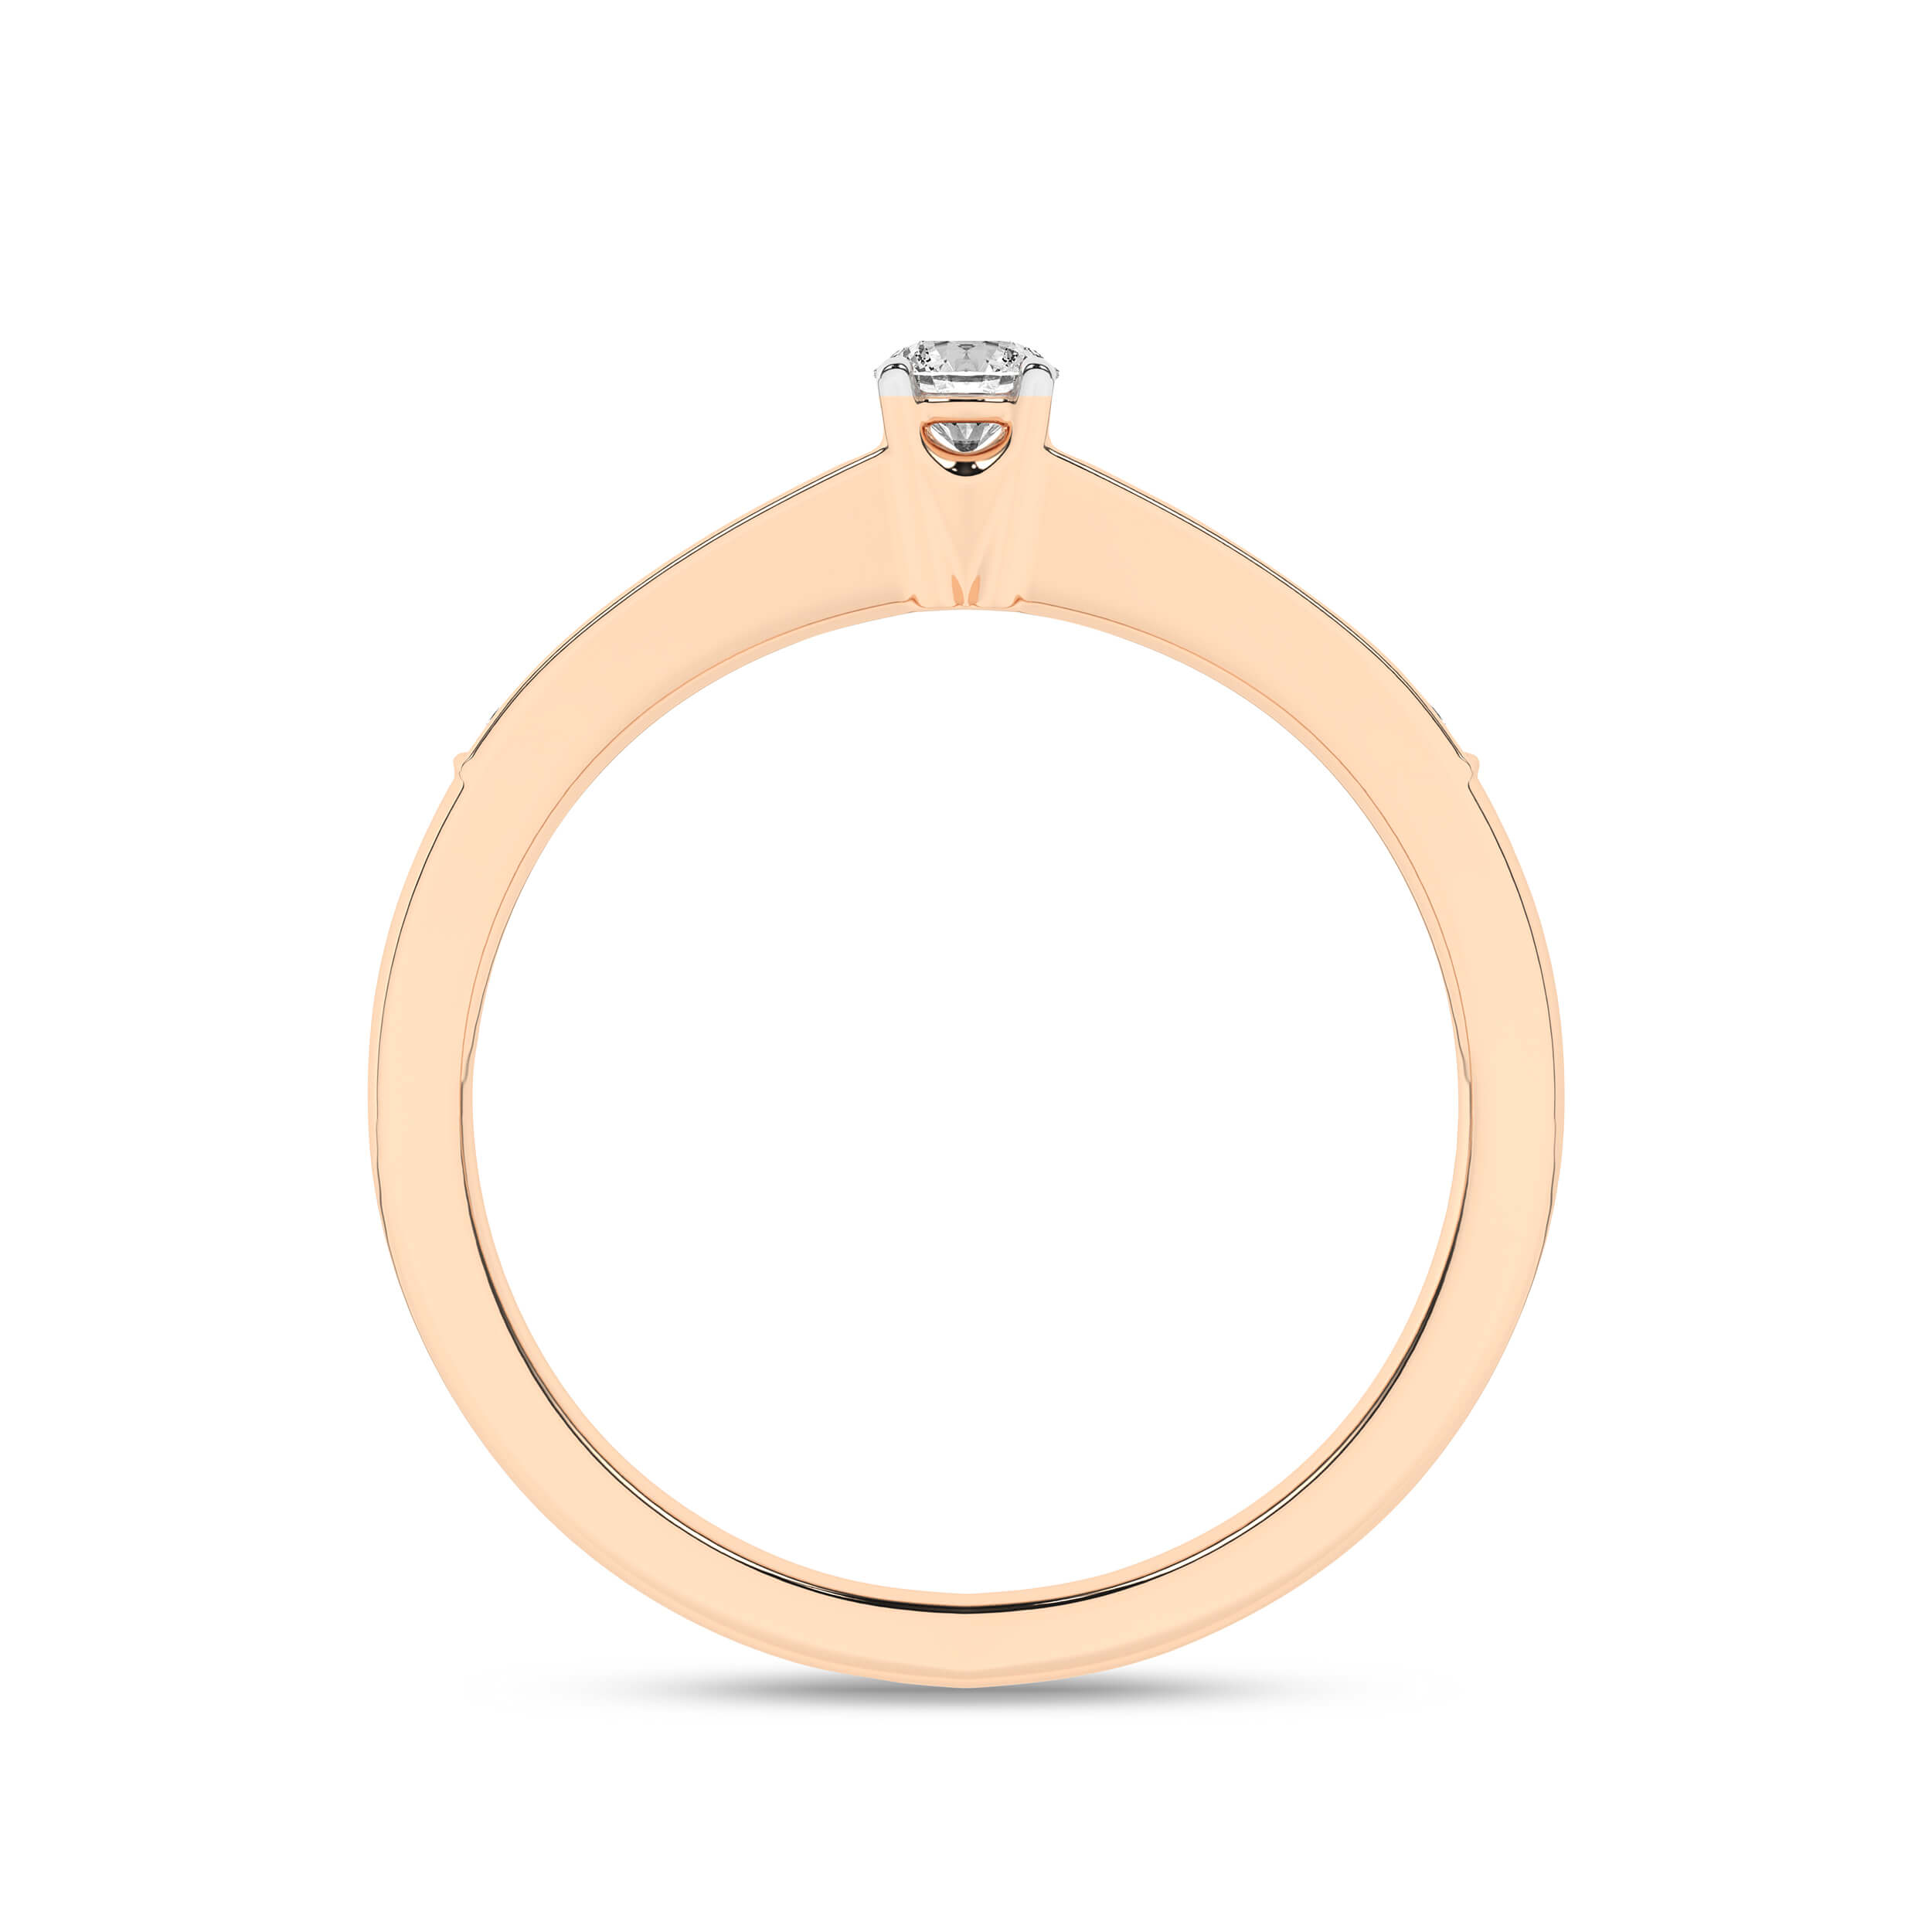 Inel de logodna din Aur Roz 14K cu Diamante 0.15Ct, articol RB17824EG, previzualizare foto 2